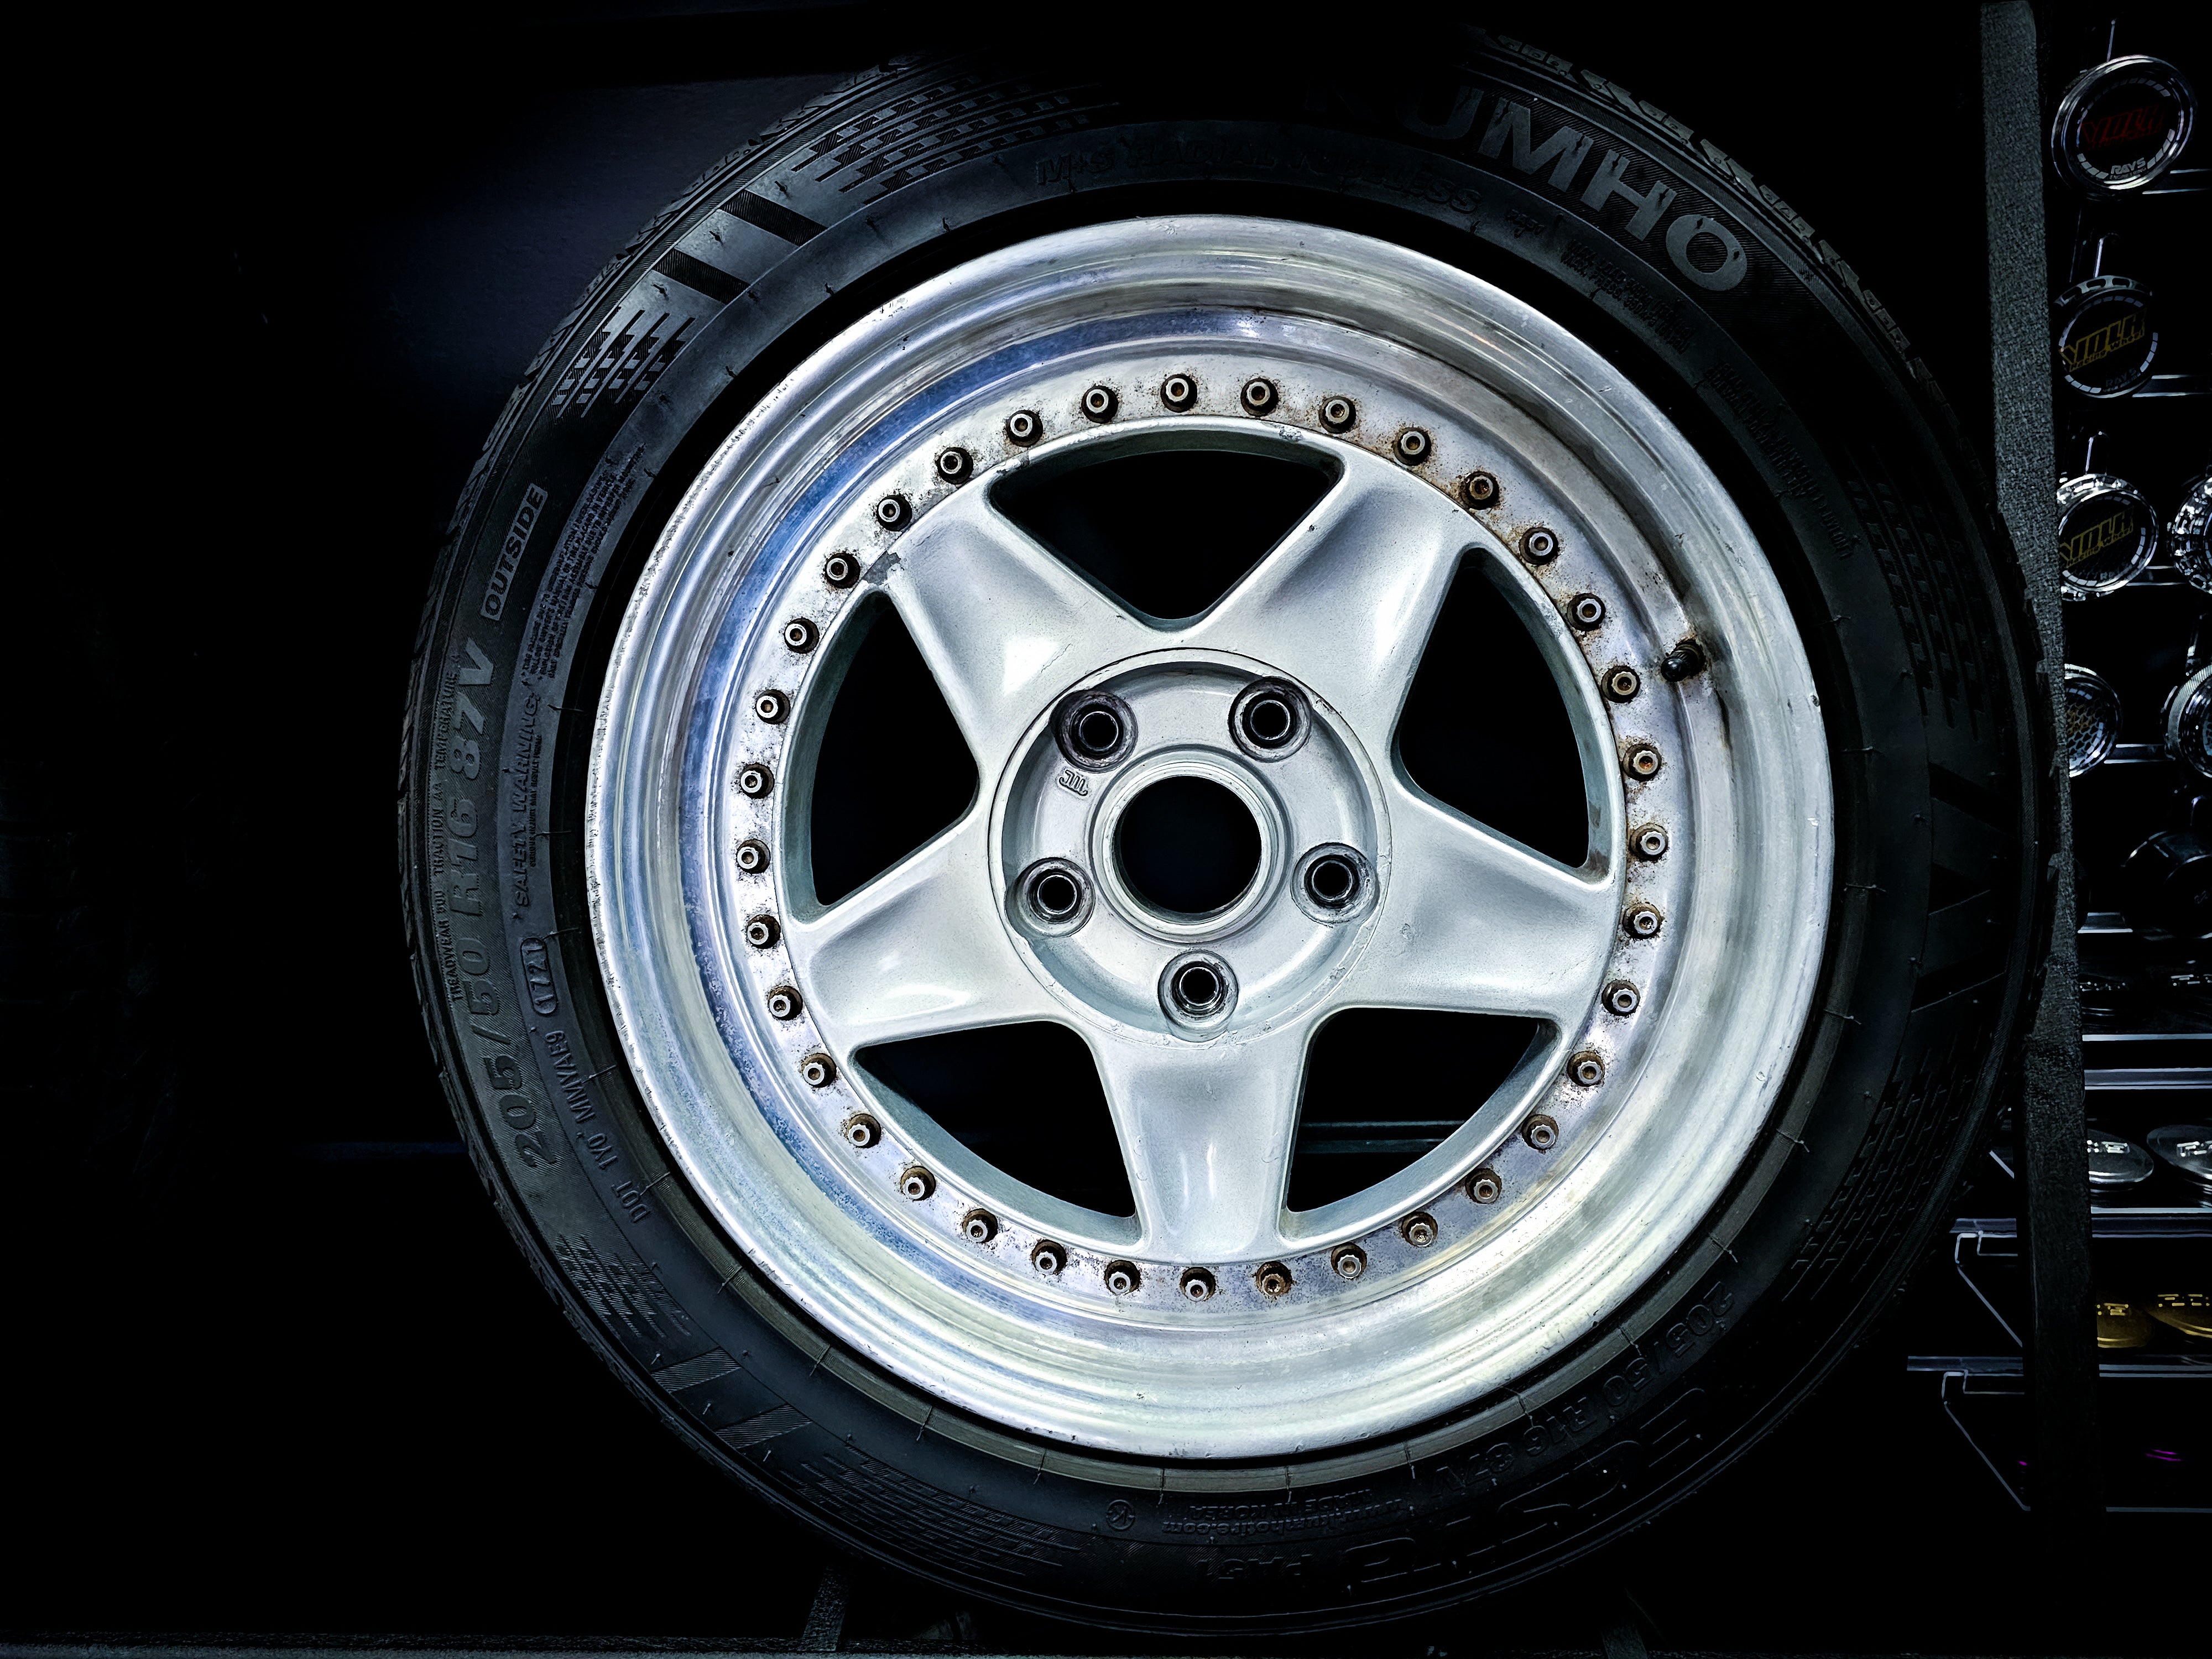 16" Monza Speed Beka 3 Piece Polished Lipped Wheels x 4